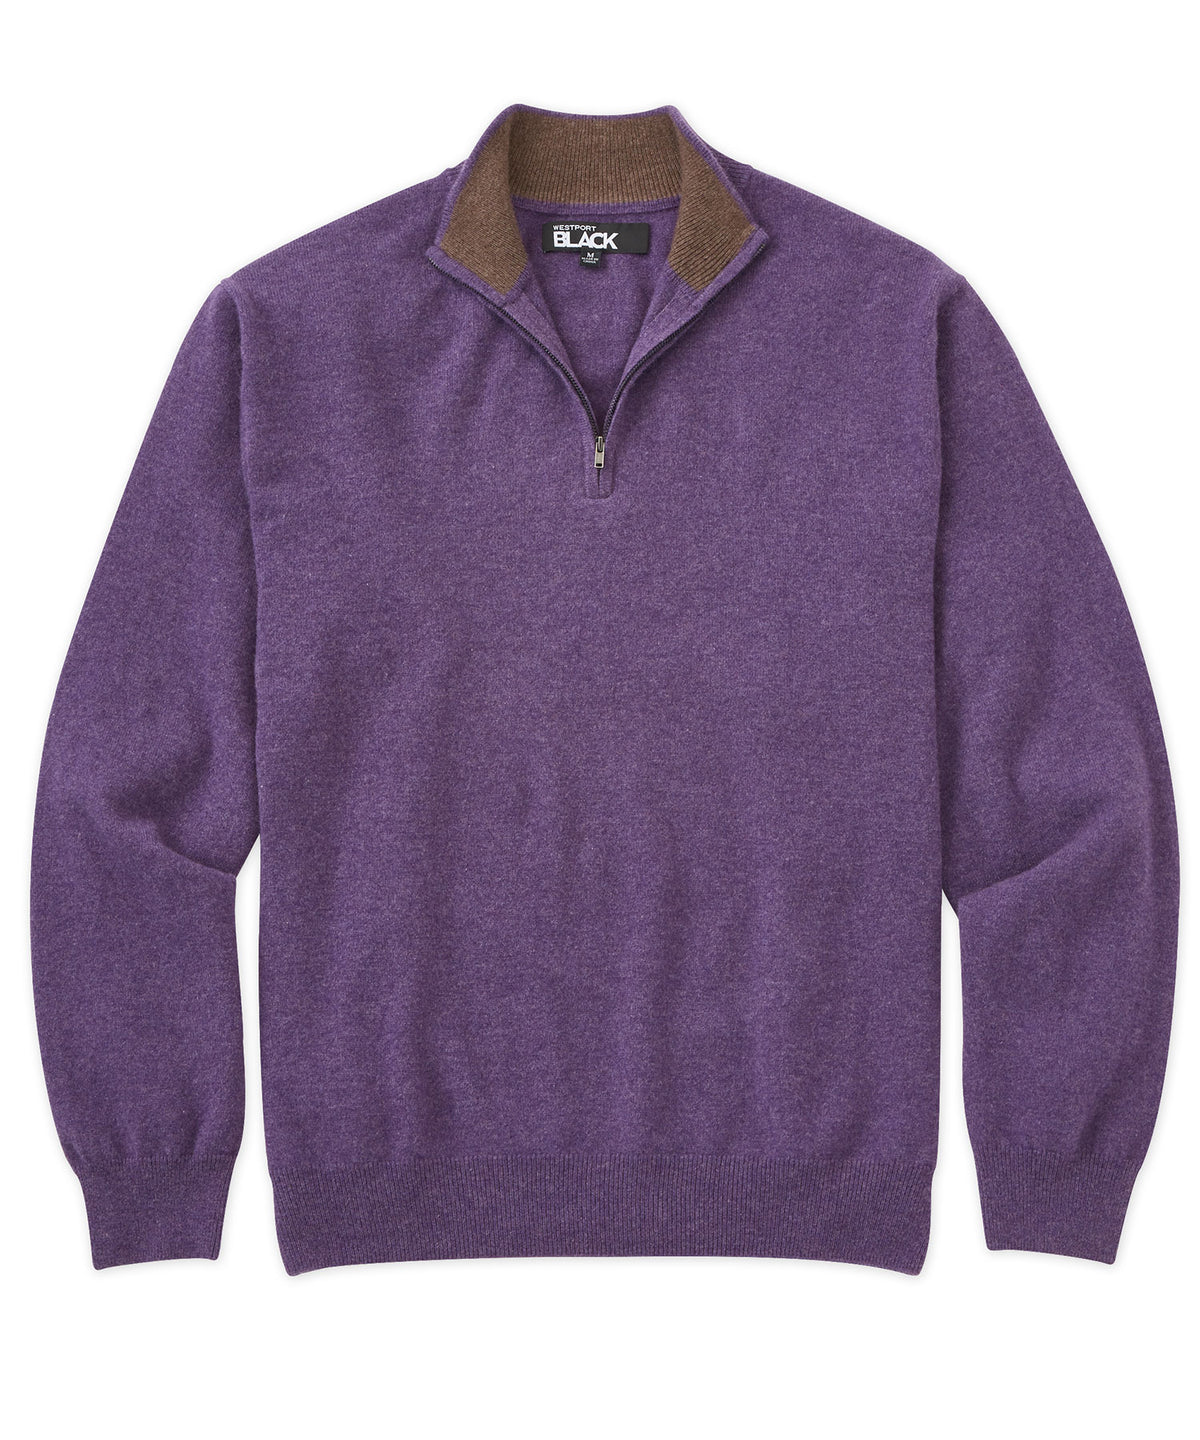 Westport Black Cashmere Quarter-Zip Sweater, Men's Big & Tall